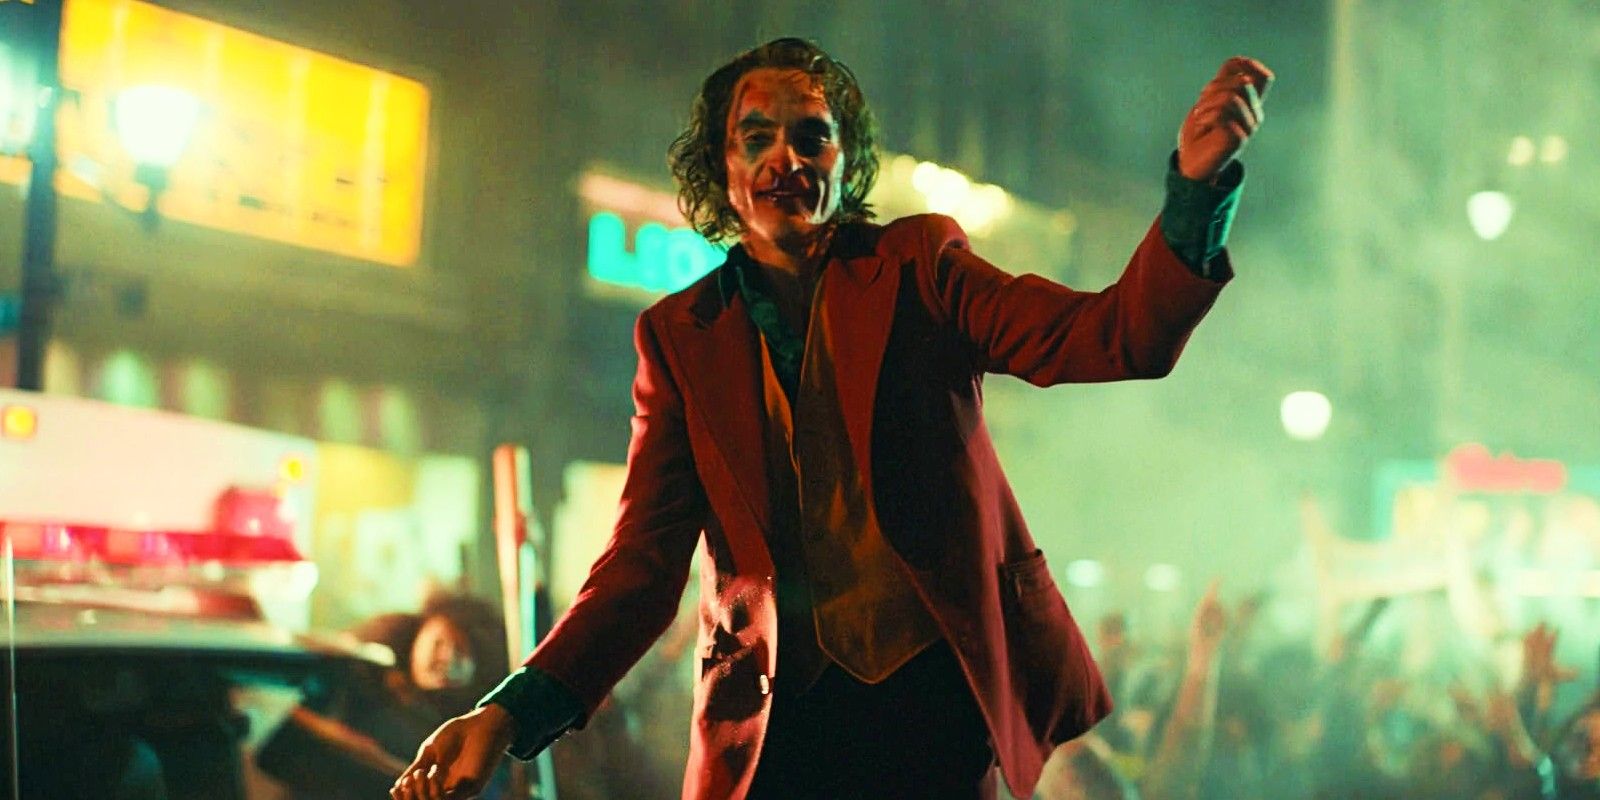 Joker dancing on car during riot in Joker